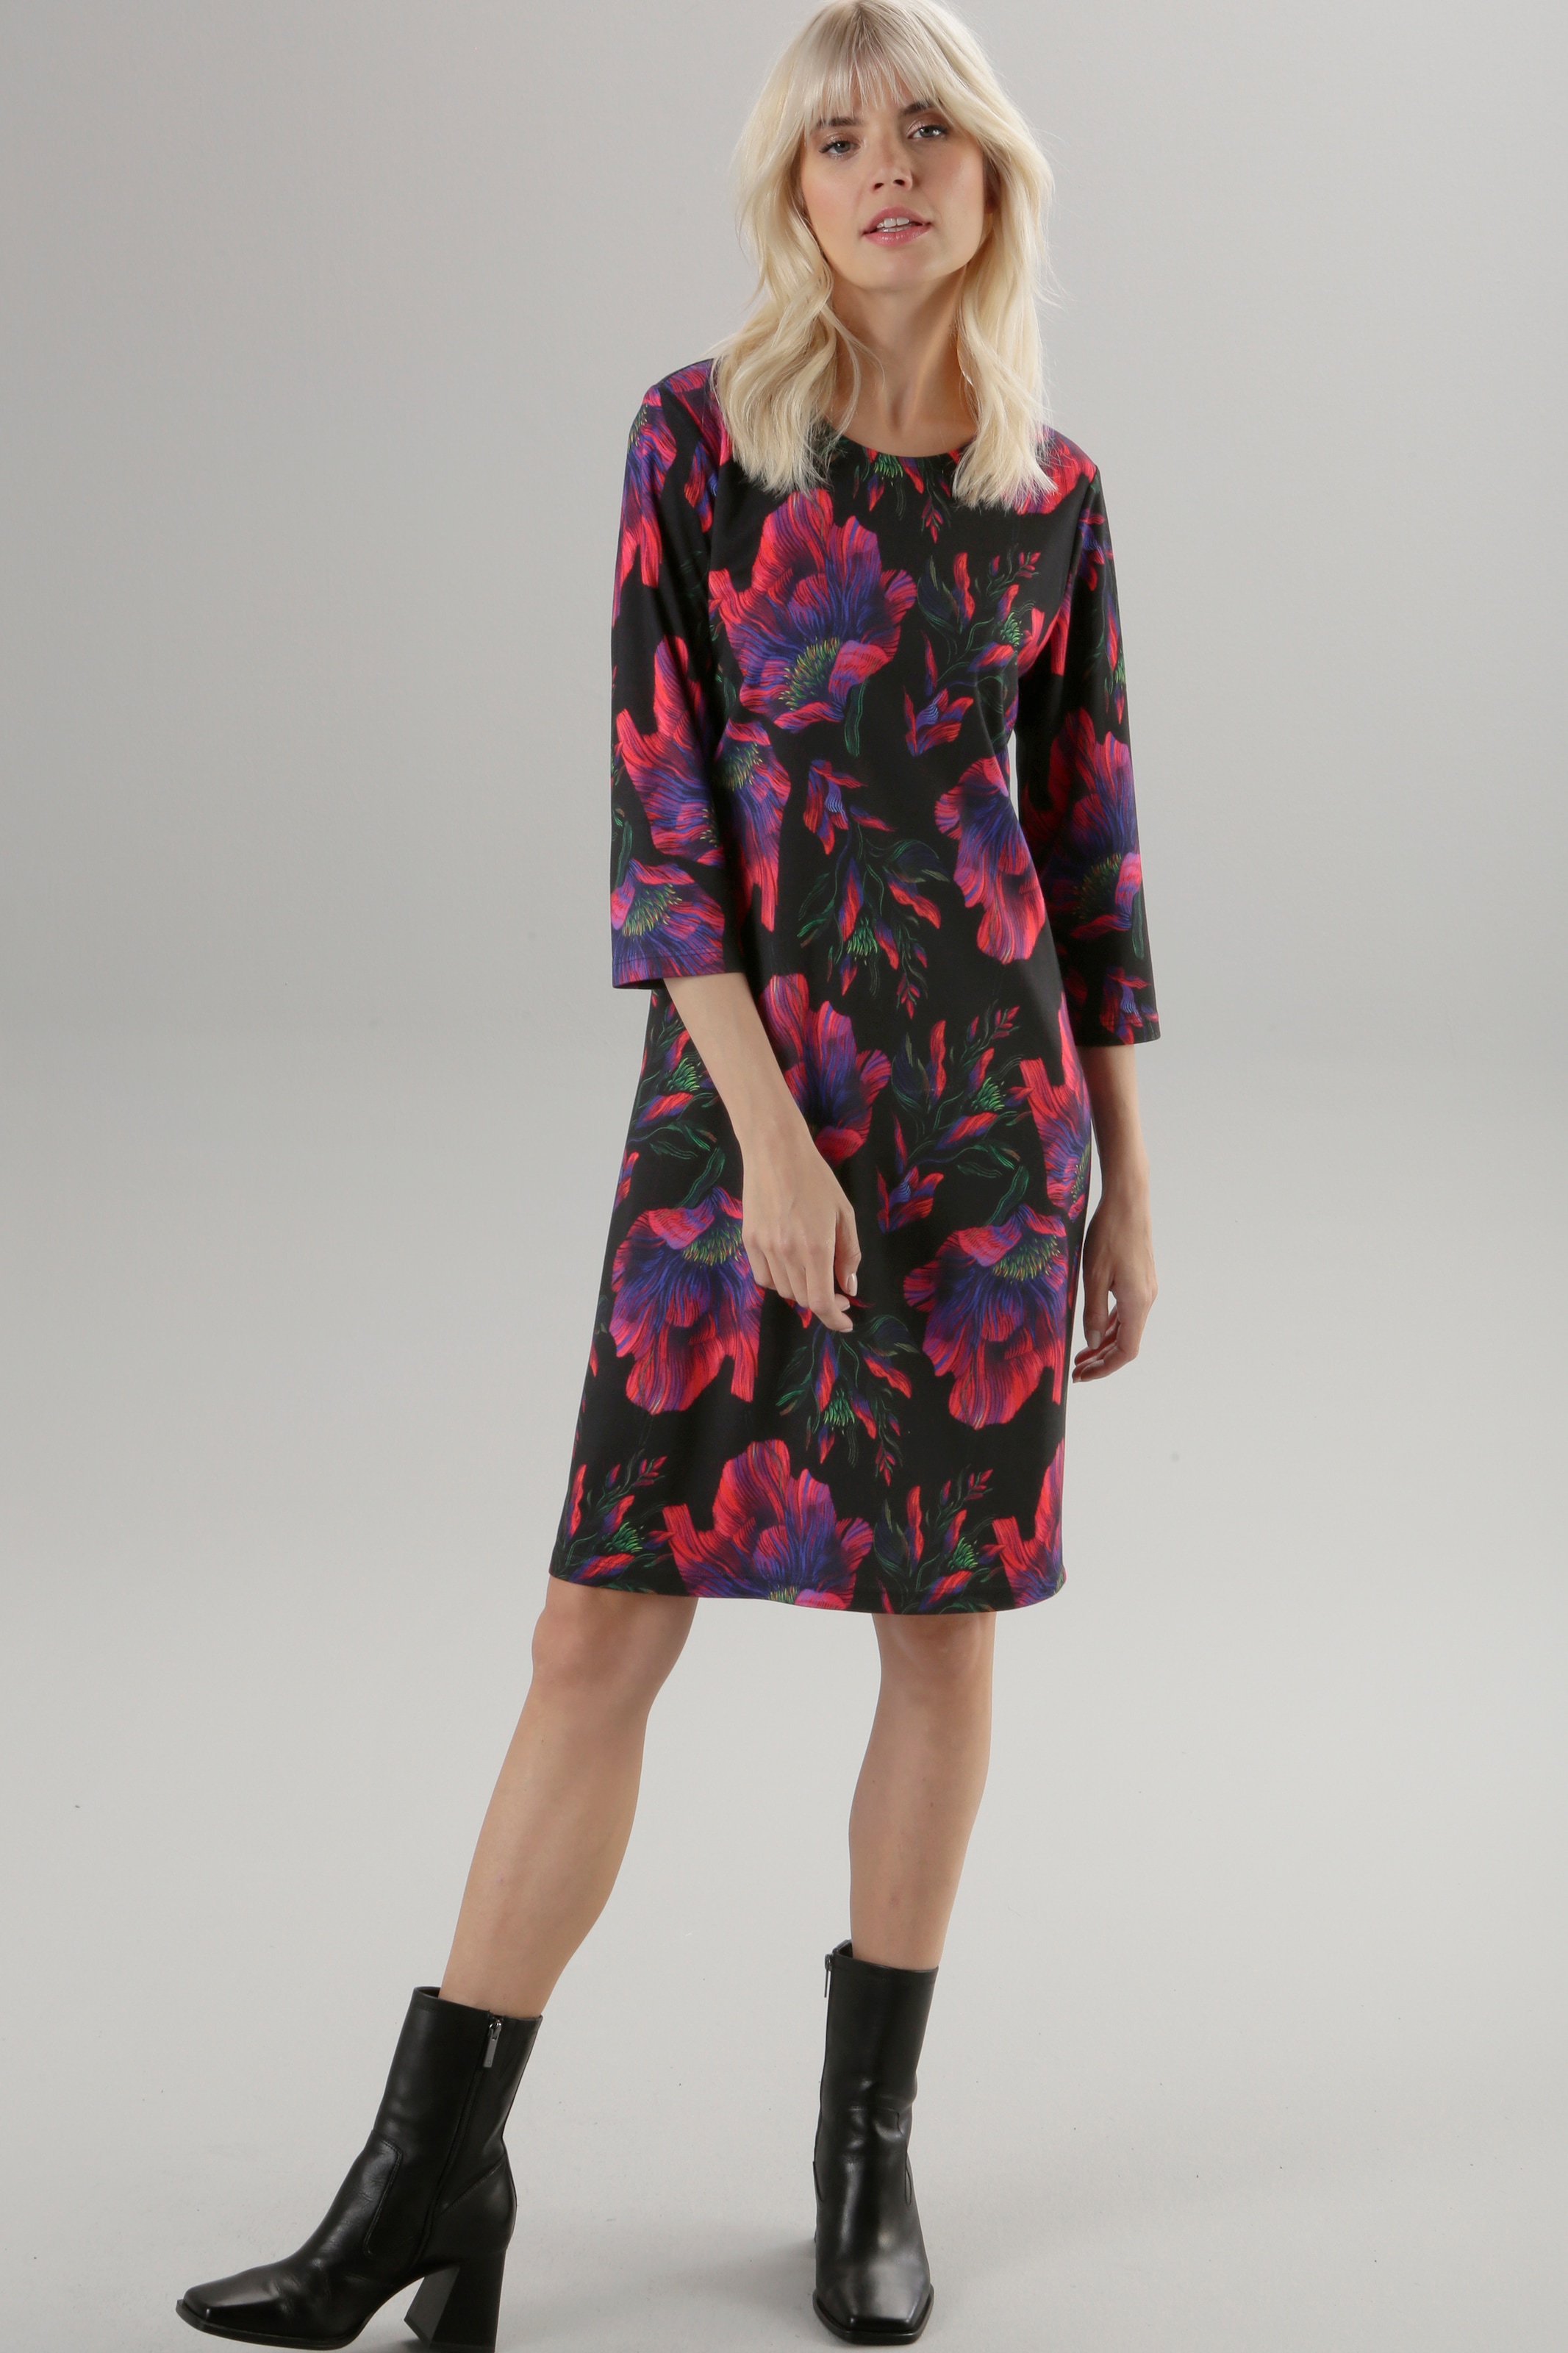 Aniston SELECTED Jerseykleid, Knallfarben Blumendruck kaufen mit in